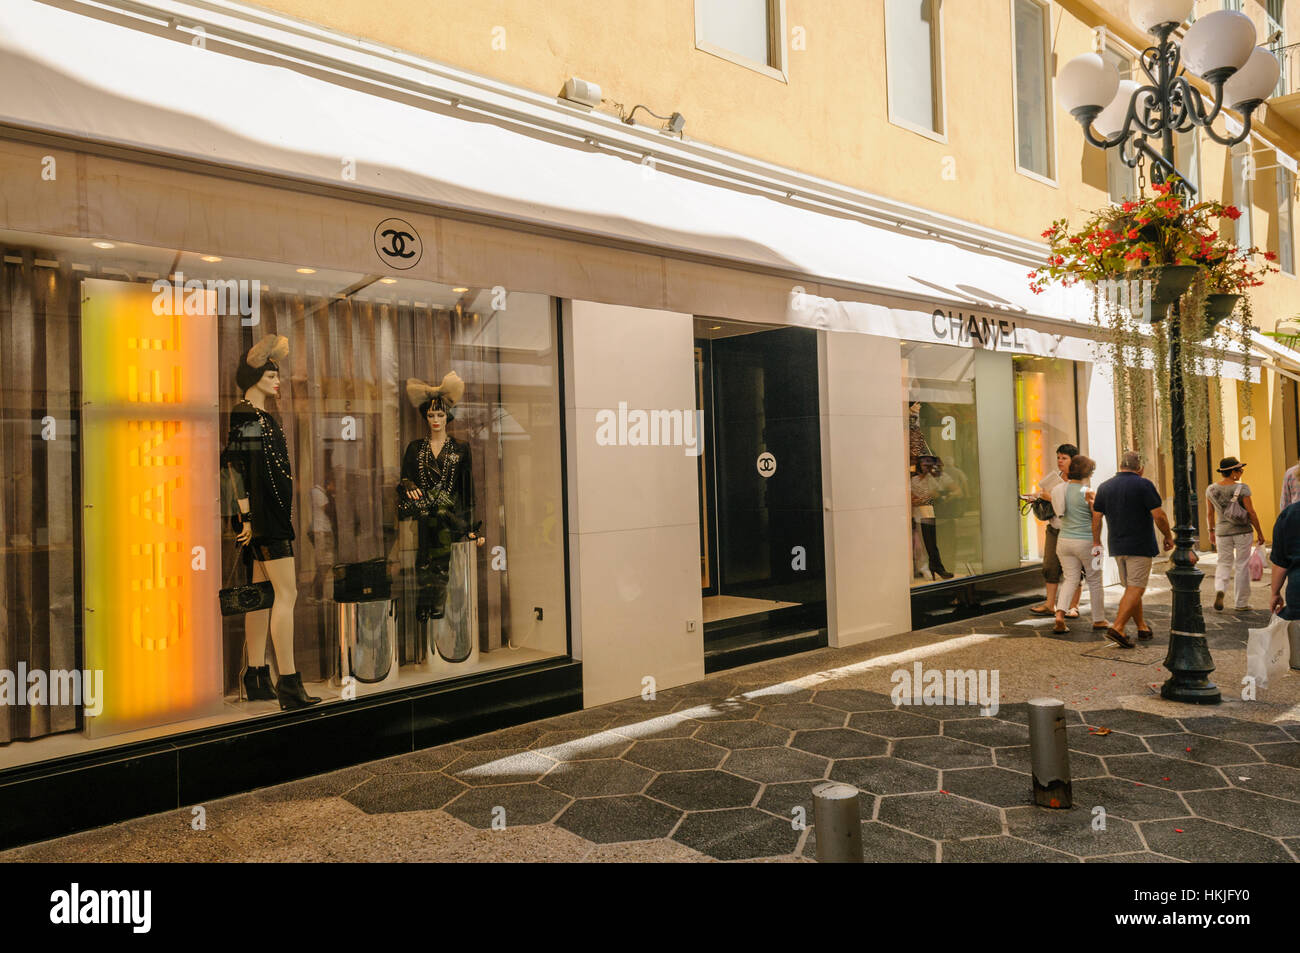 Chanel designer clothing store, Nice, France Stock Photo